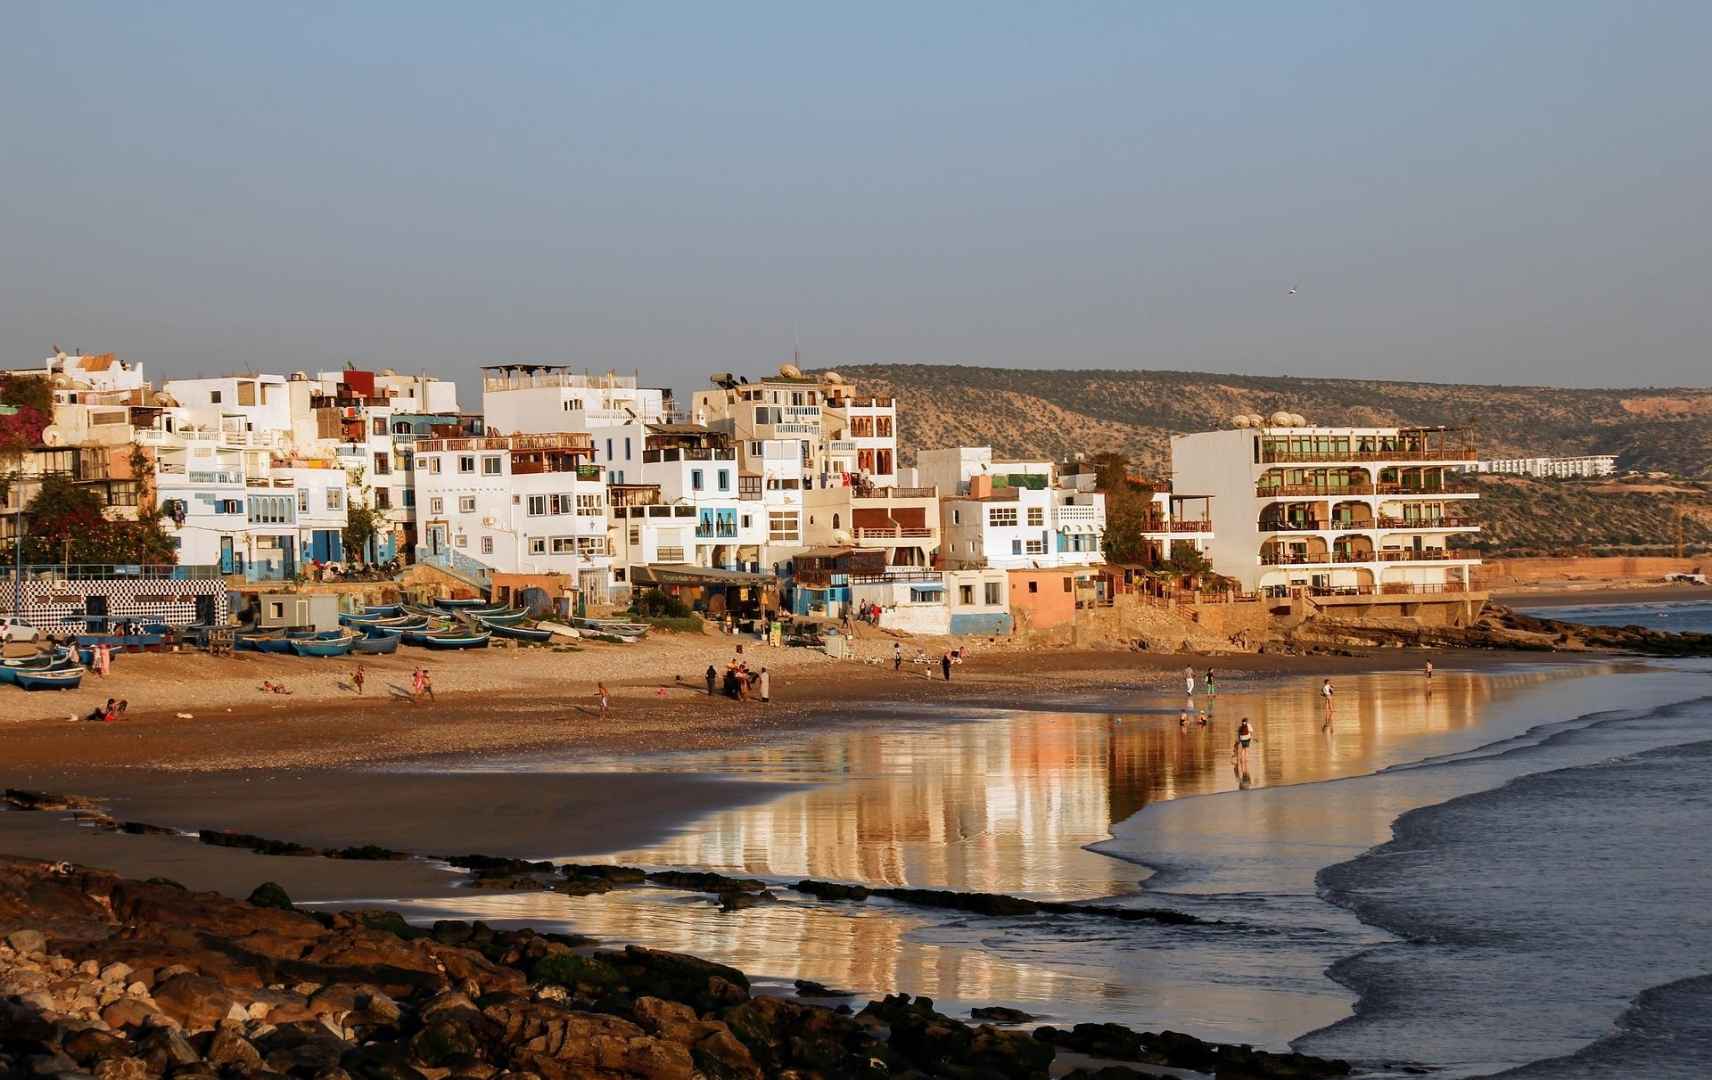 Strand in Taghazout, Agadir